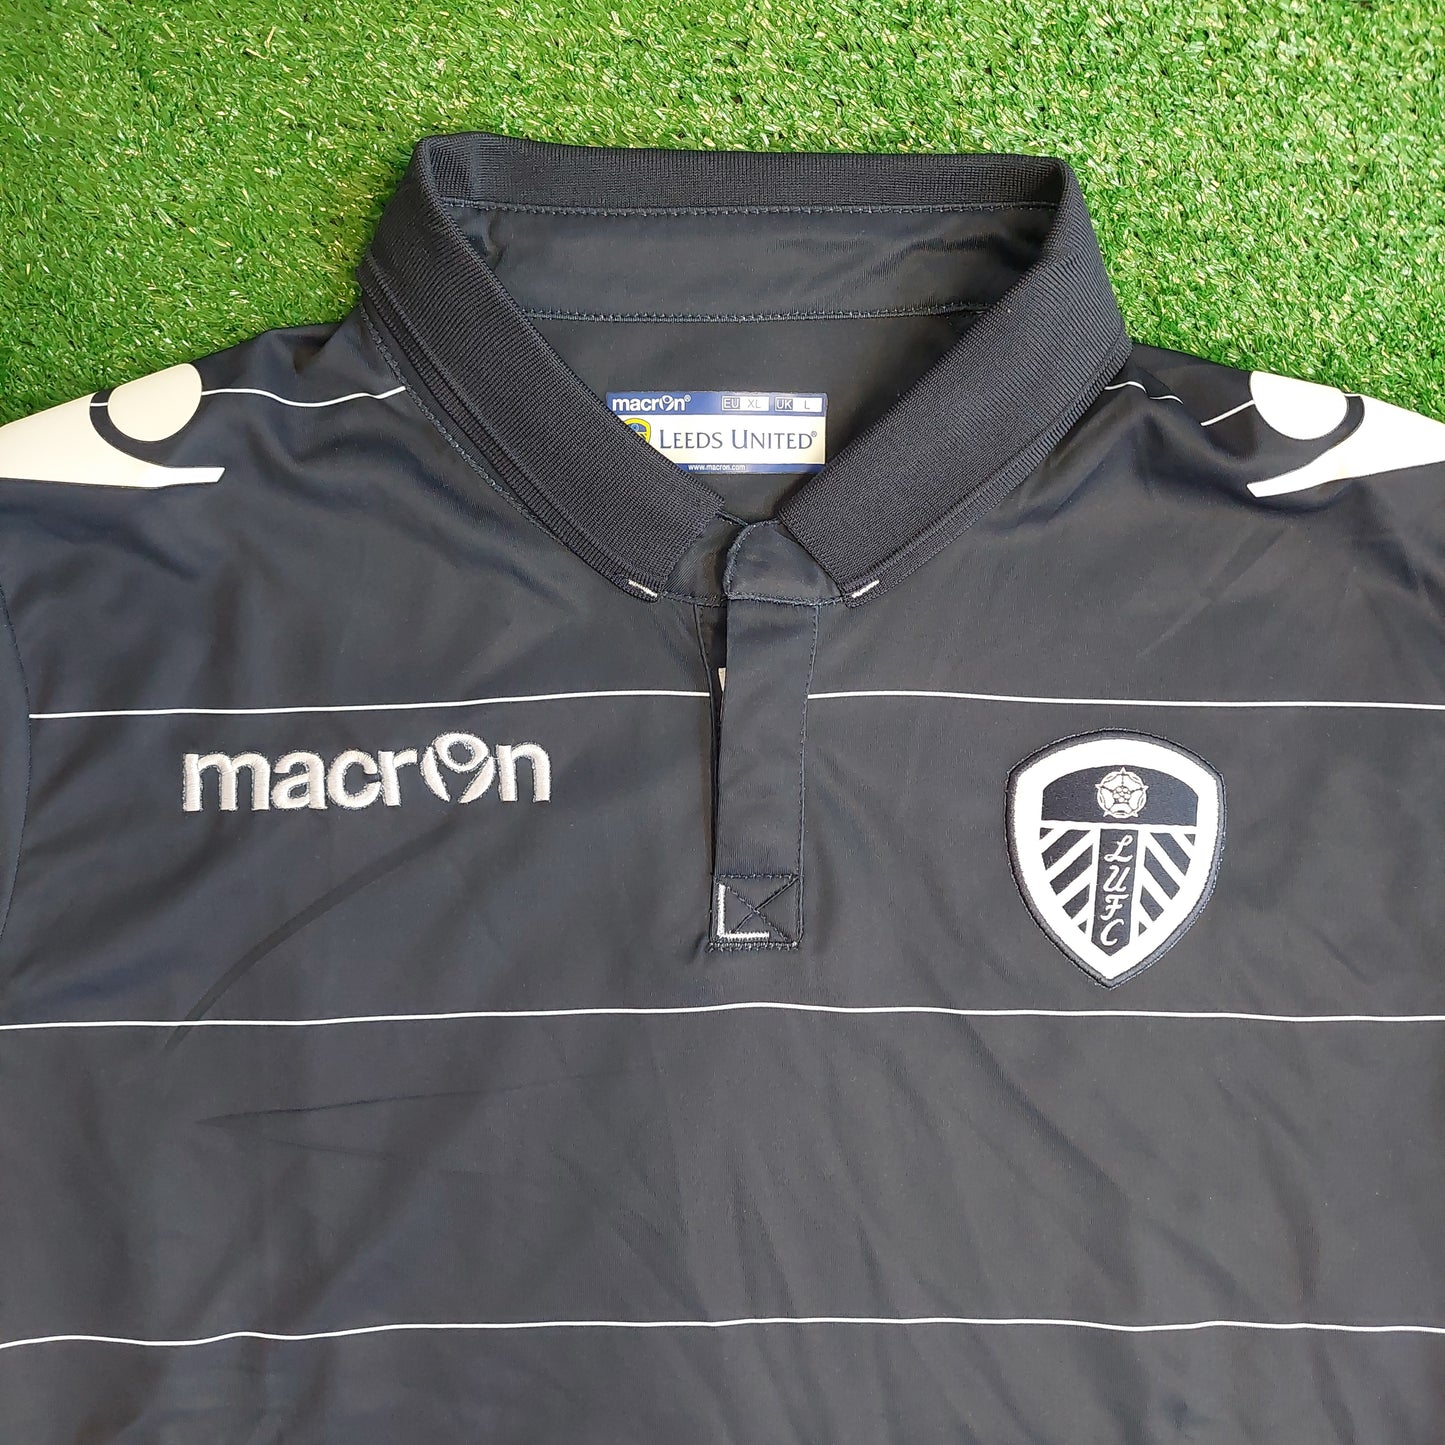 Leeds United 2014/15 *Sponsorless* Away Shirt (Excellent) - Size L